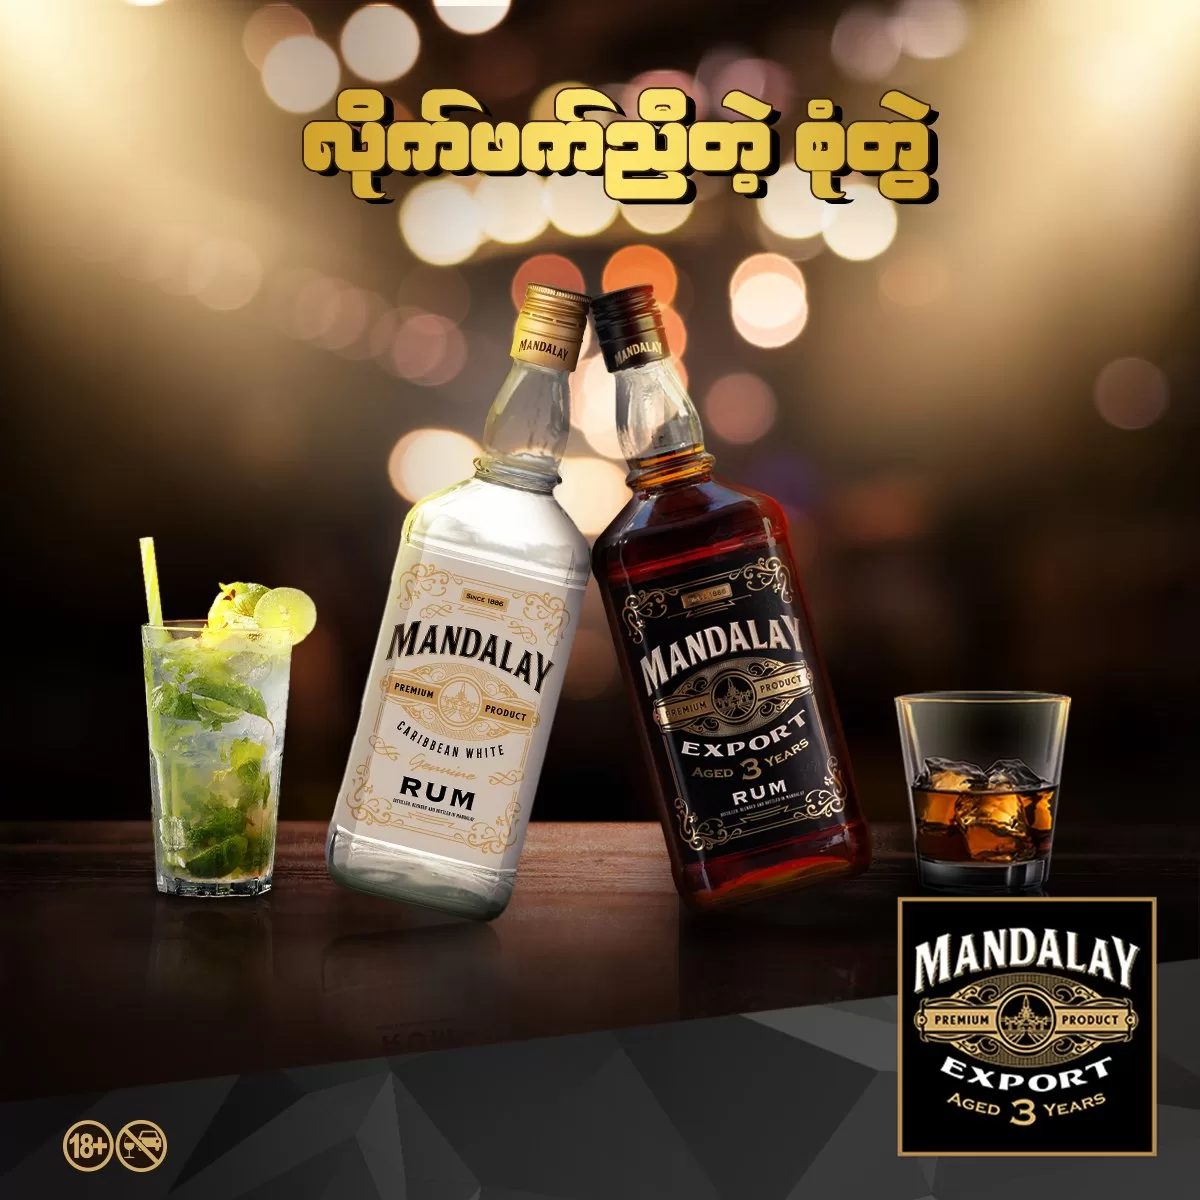 The Mandalay Rum